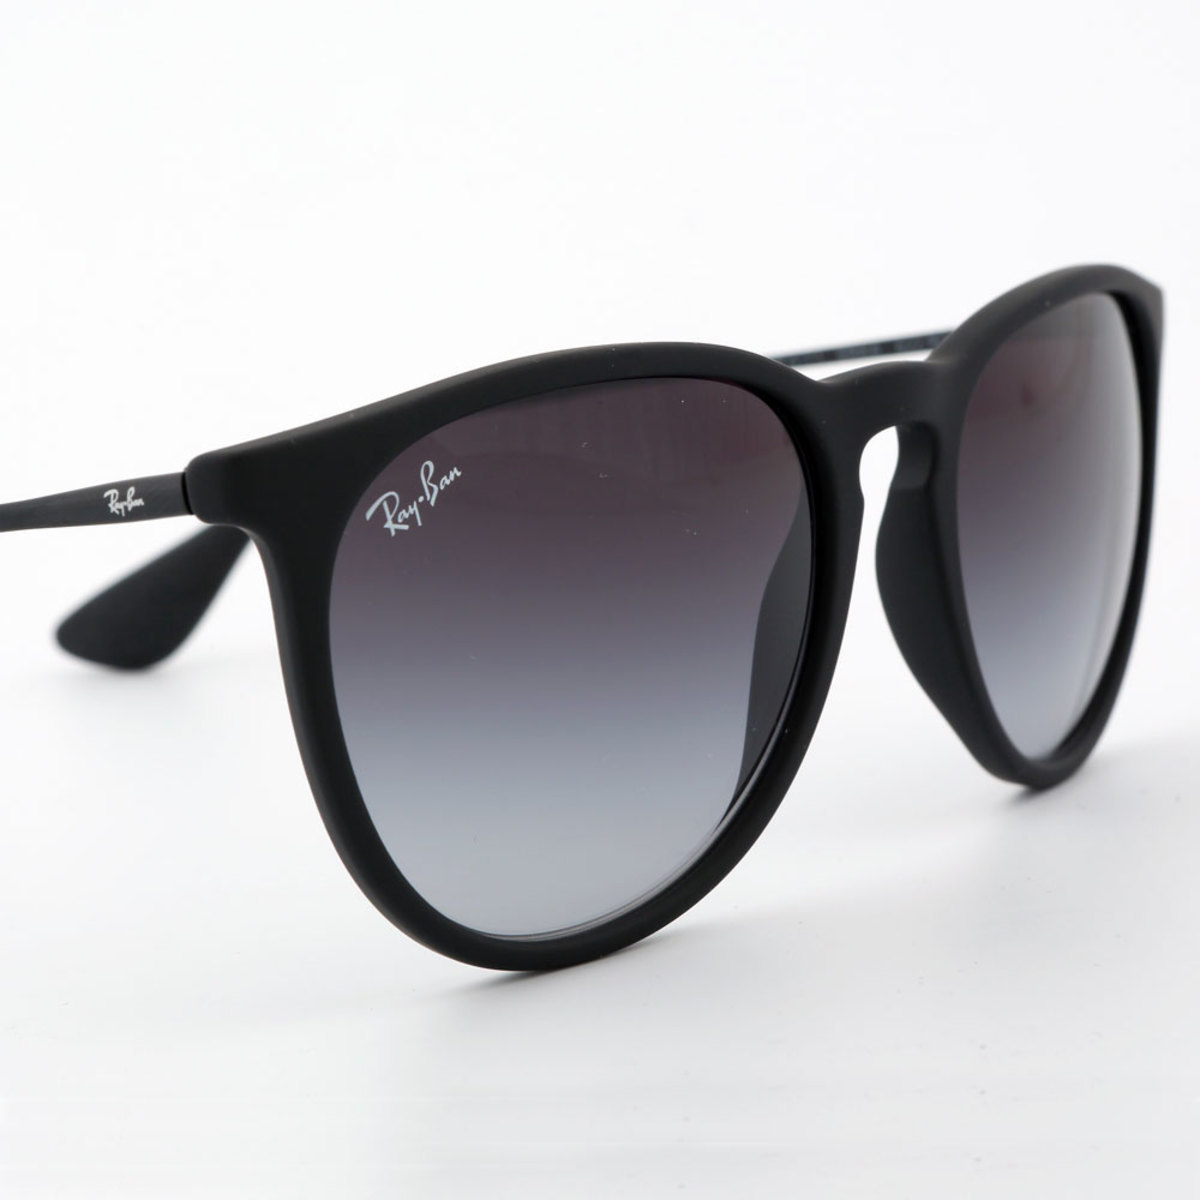 Ray-Ban Erika Black Sunglasses with Grey Lenses, RB4171 622/8G